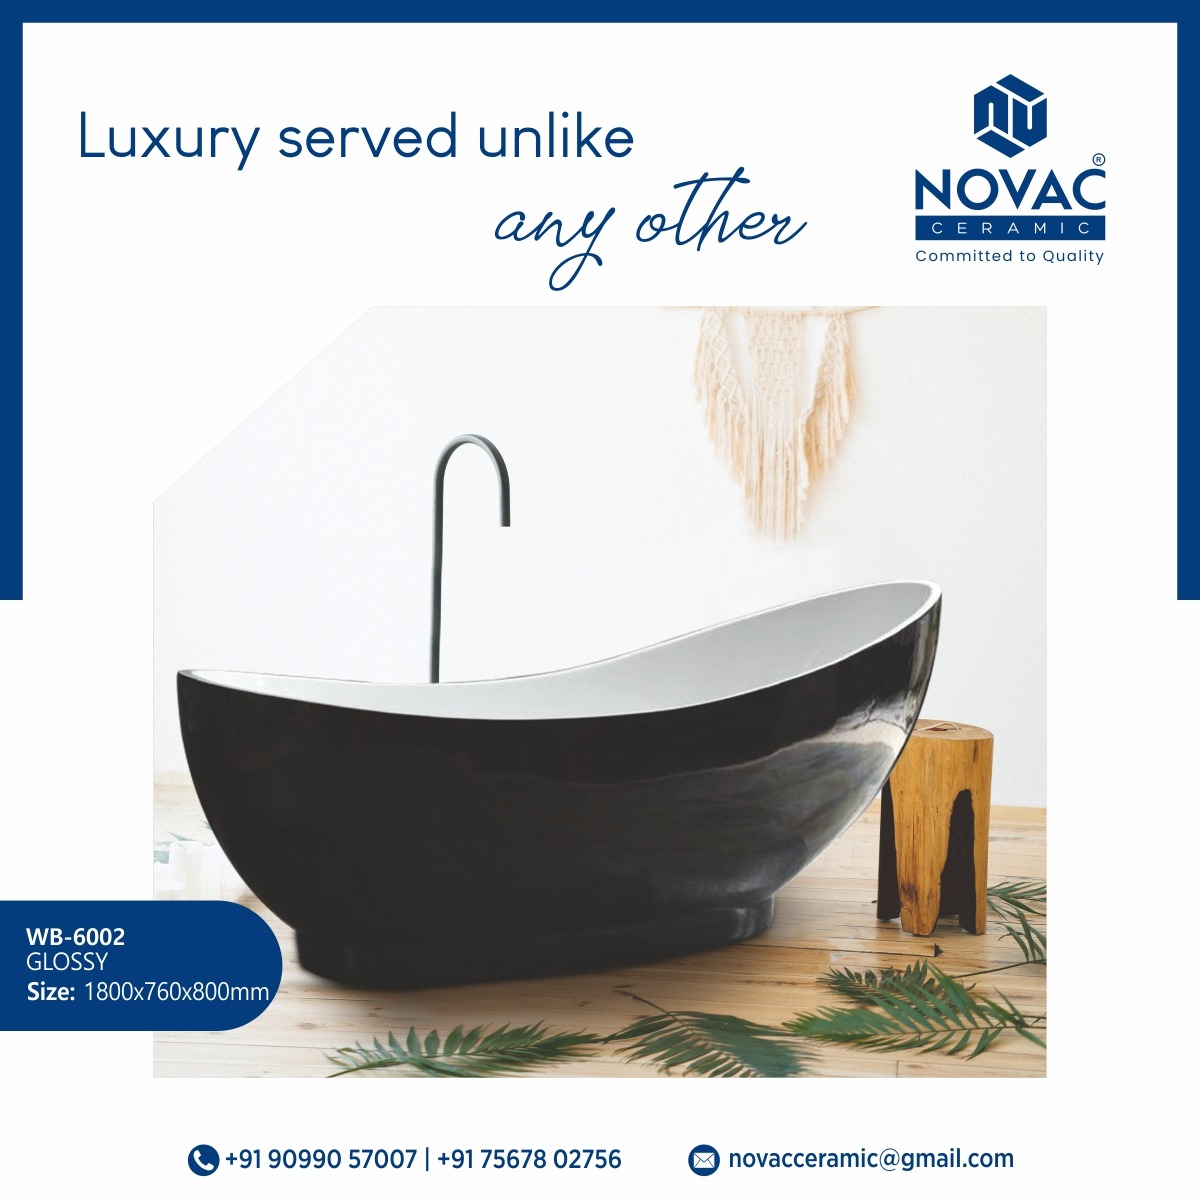 𝐄𝐱𝐩𝐞𝐫𝐢𝐞𝐧𝐜𝐞 𝐭𝐡𝐞 𝐛𝐫𝐢𝐥𝐥𝐢𝐚𝐧𝐜𝐞 𝐨𝐟 𝐭𝐞𝐜𝐡𝐧𝐨𝐥𝐨𝐠𝐲 𝐚𝐧𝐝 𝐞𝐱𝐜𝐞𝐥𝐥𝐞𝐧𝐜𝐞 𝐨𝐟 𝐚𝐫𝐭.
Contact: 909 9057 007 || 756 7825 756
Follow Novac Bathware for more such products.
#novac #bathtub #bathroomdesign #bathtime #novacceramic #brass #kitchensink